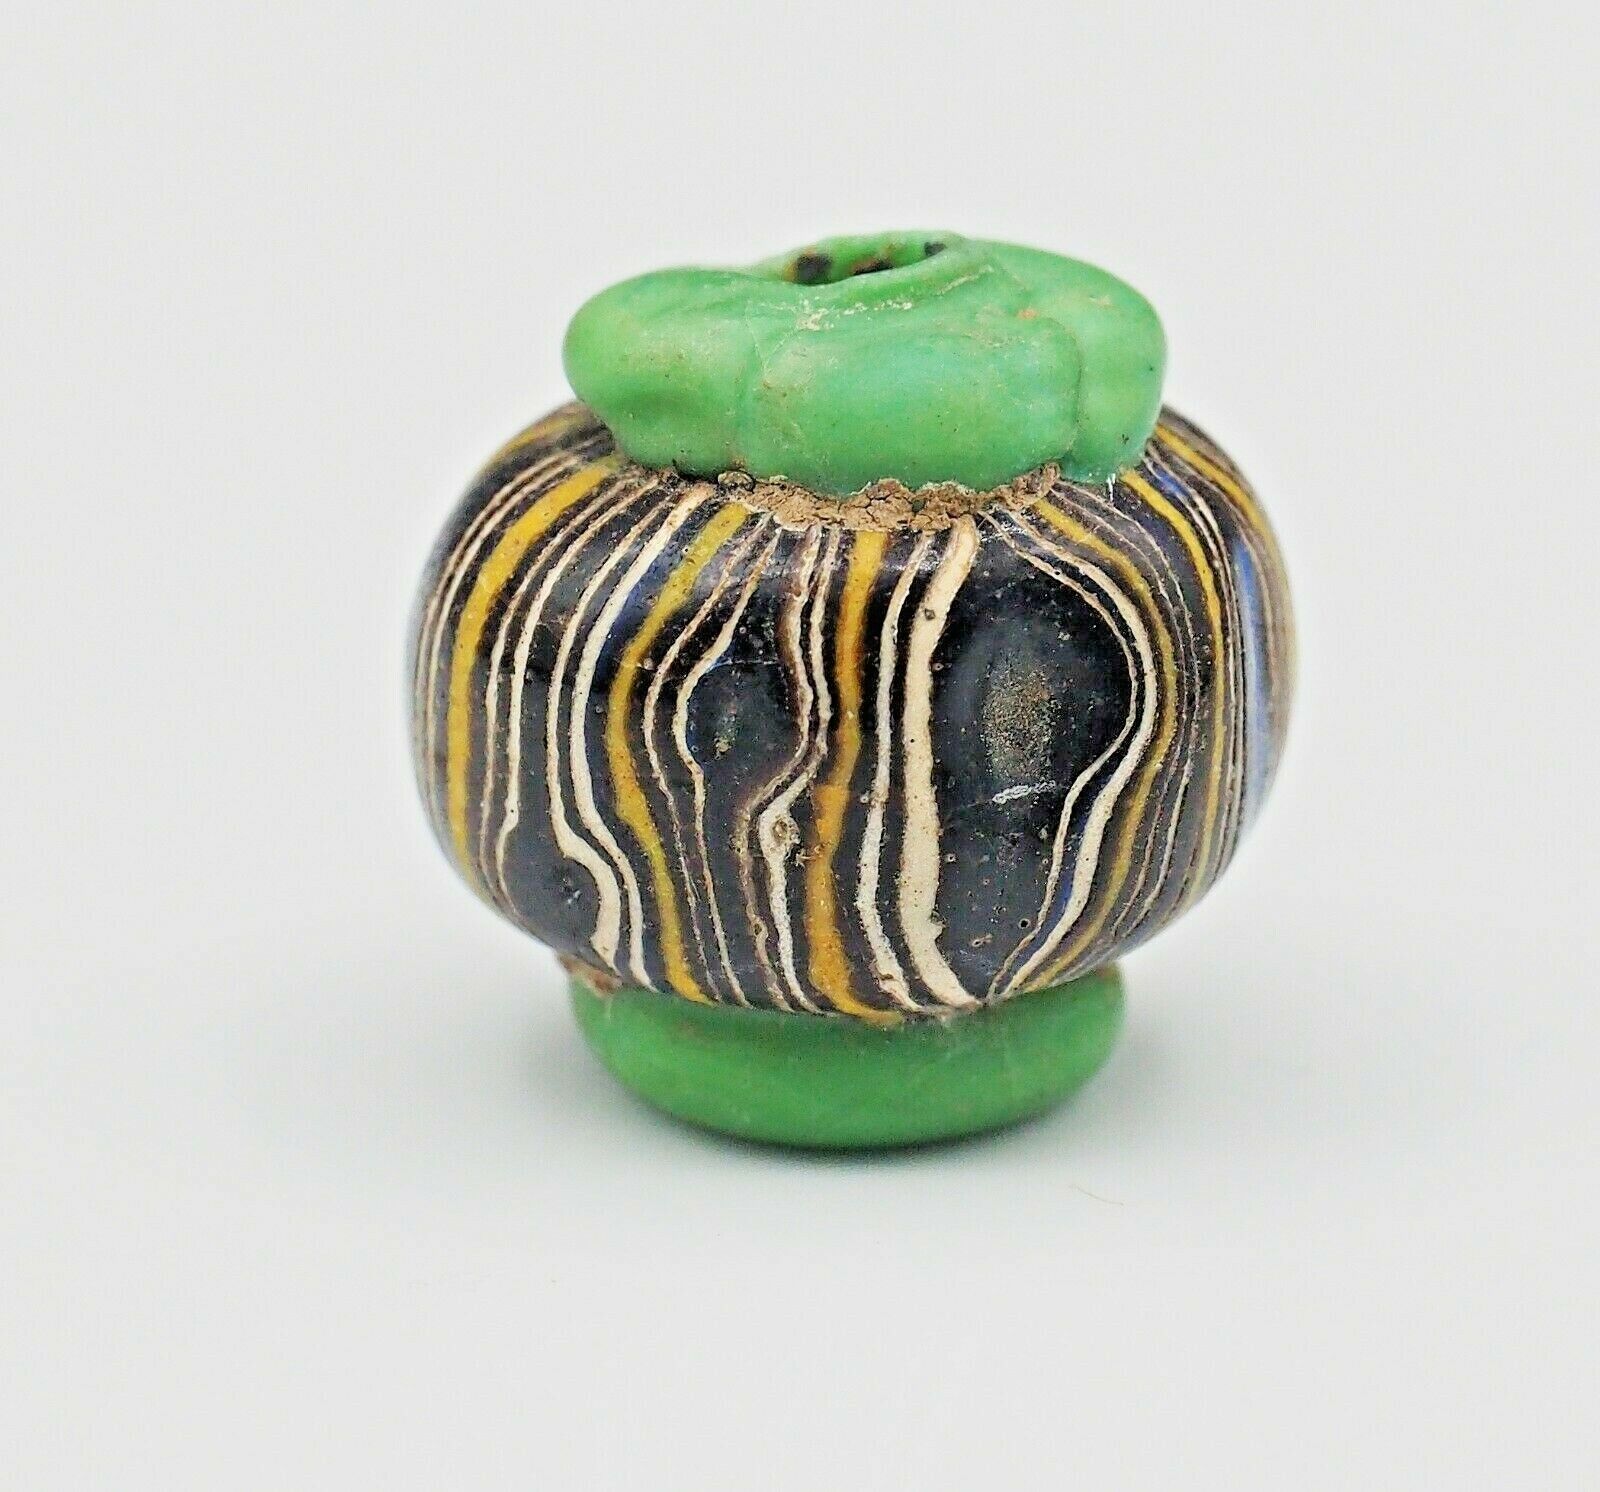 Antique Islamic Cultured Handmade Folded Core Form Swirl Green Cap Glass bead